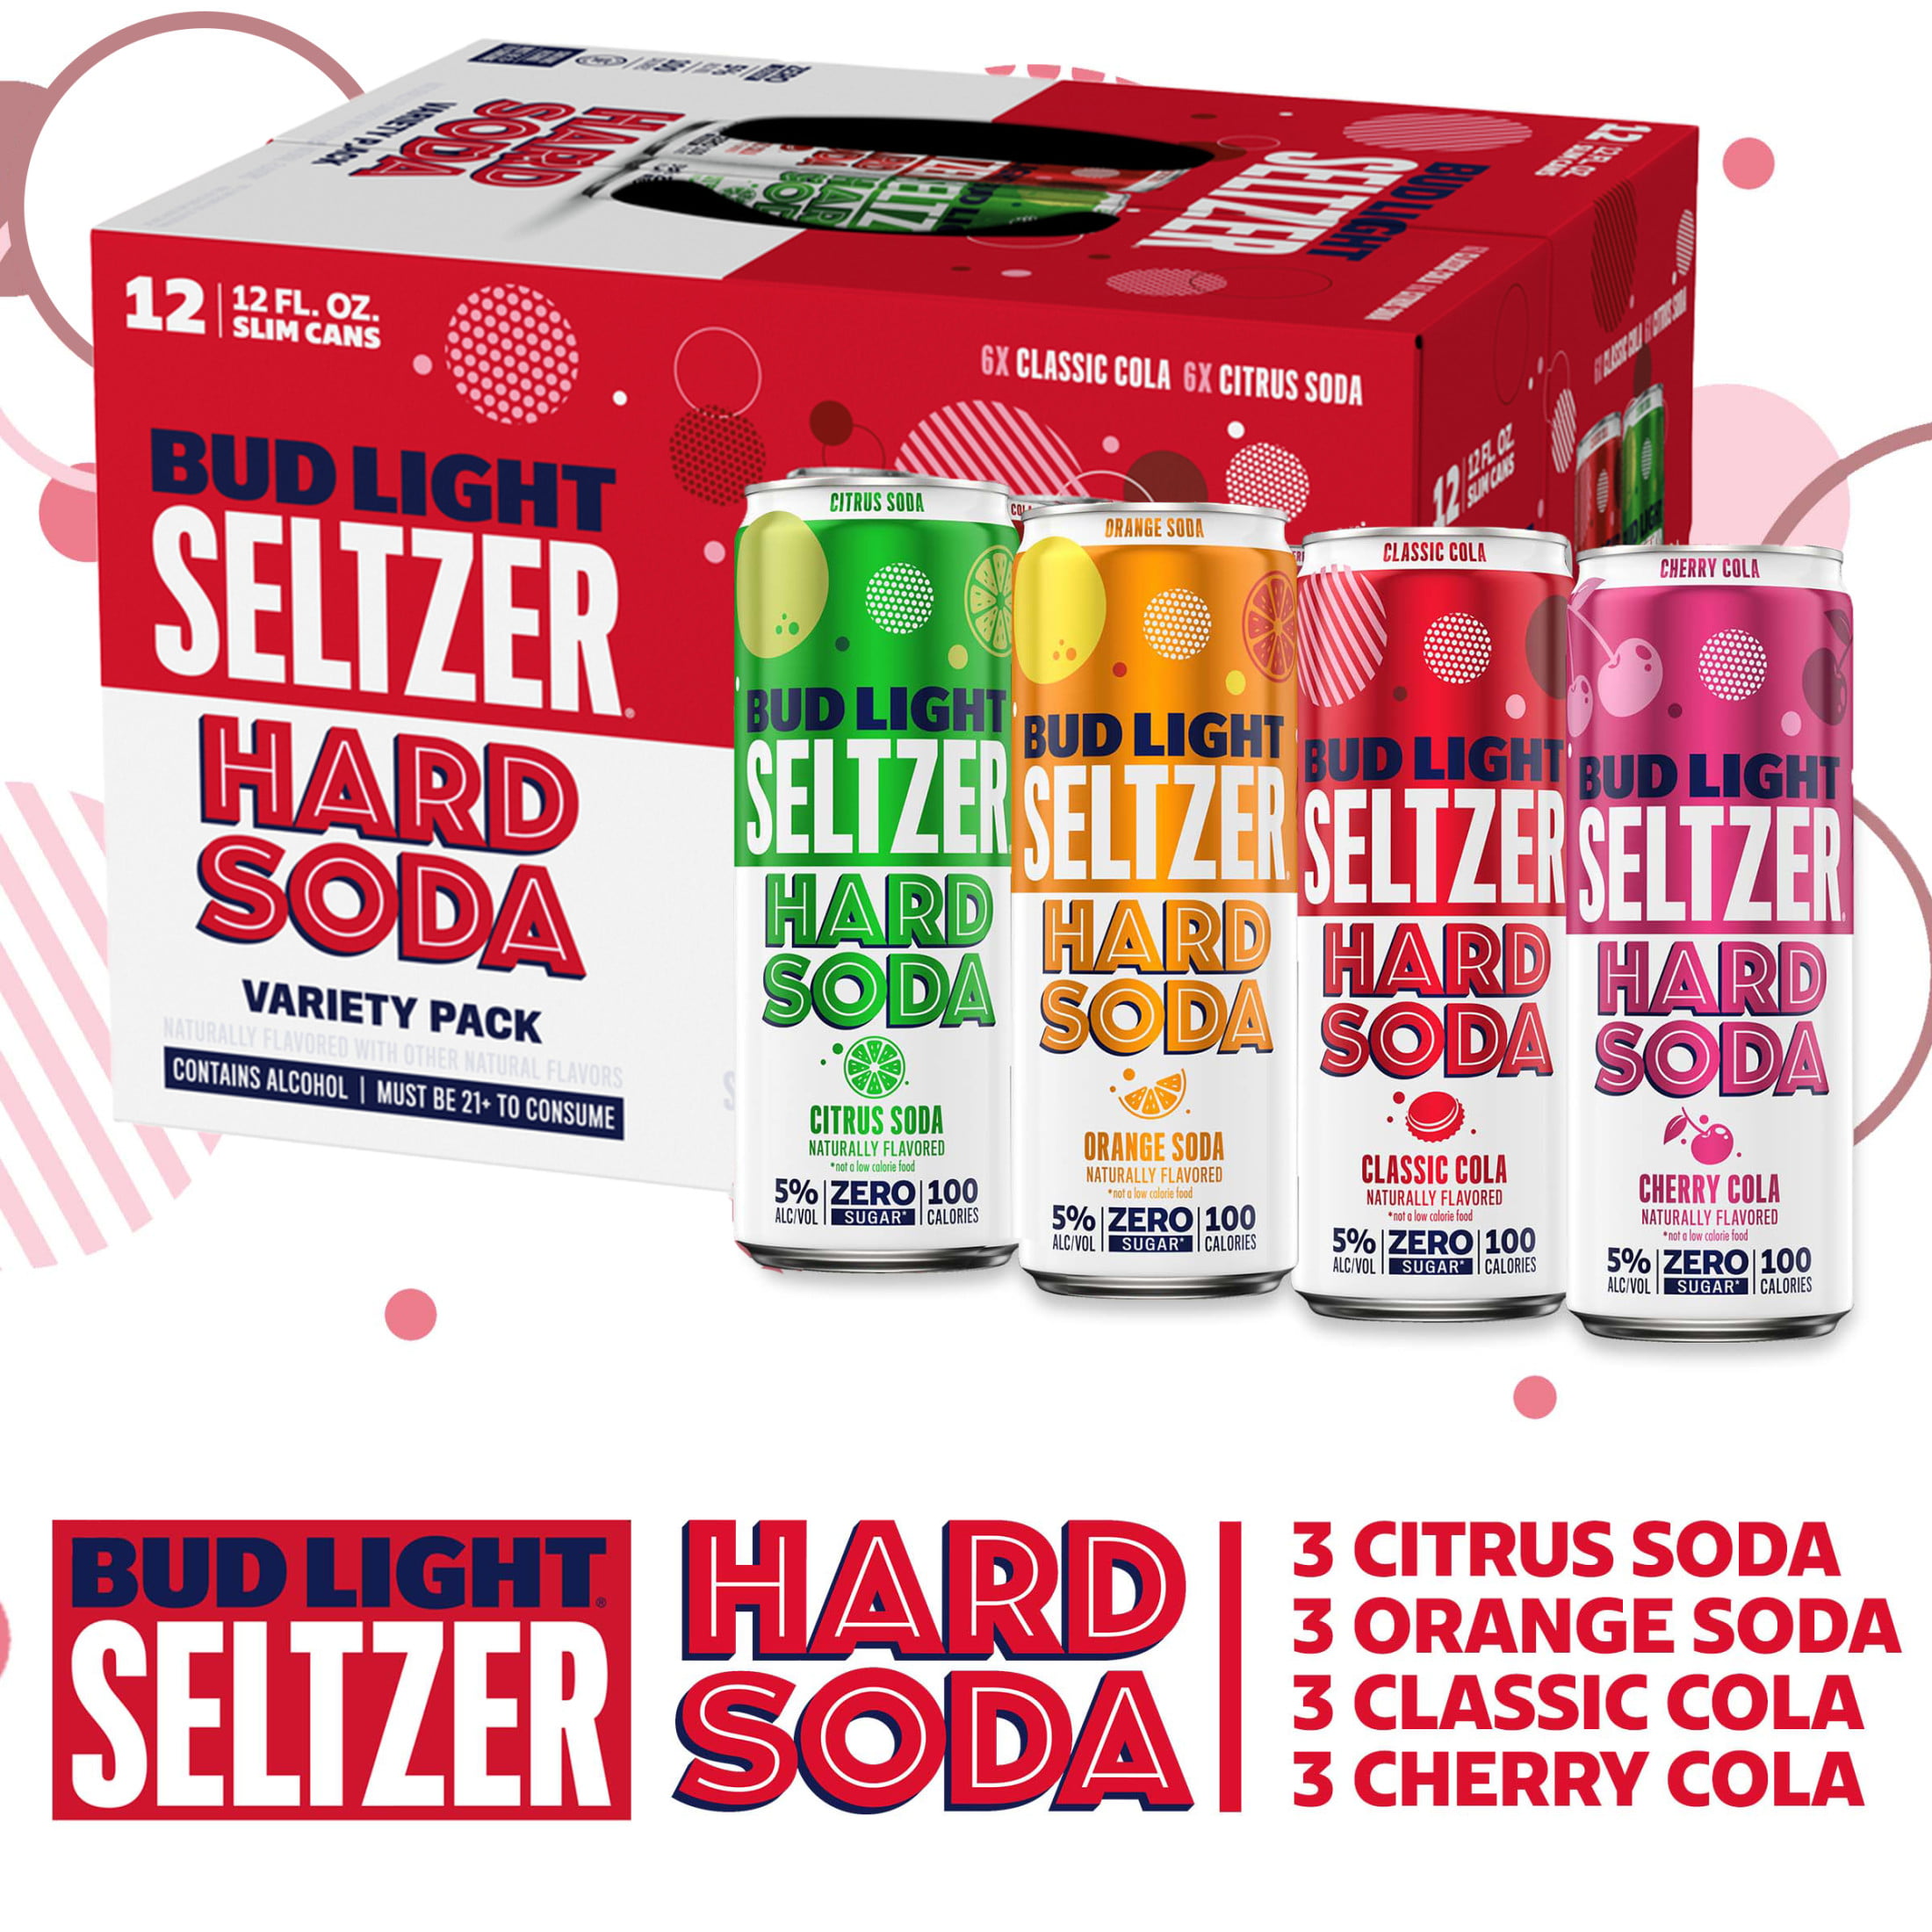 Bud Light Hard Seltzer Hard Soda Variety Pack, 12 Pack, 12 FL OZ Cans, 5 % ABV